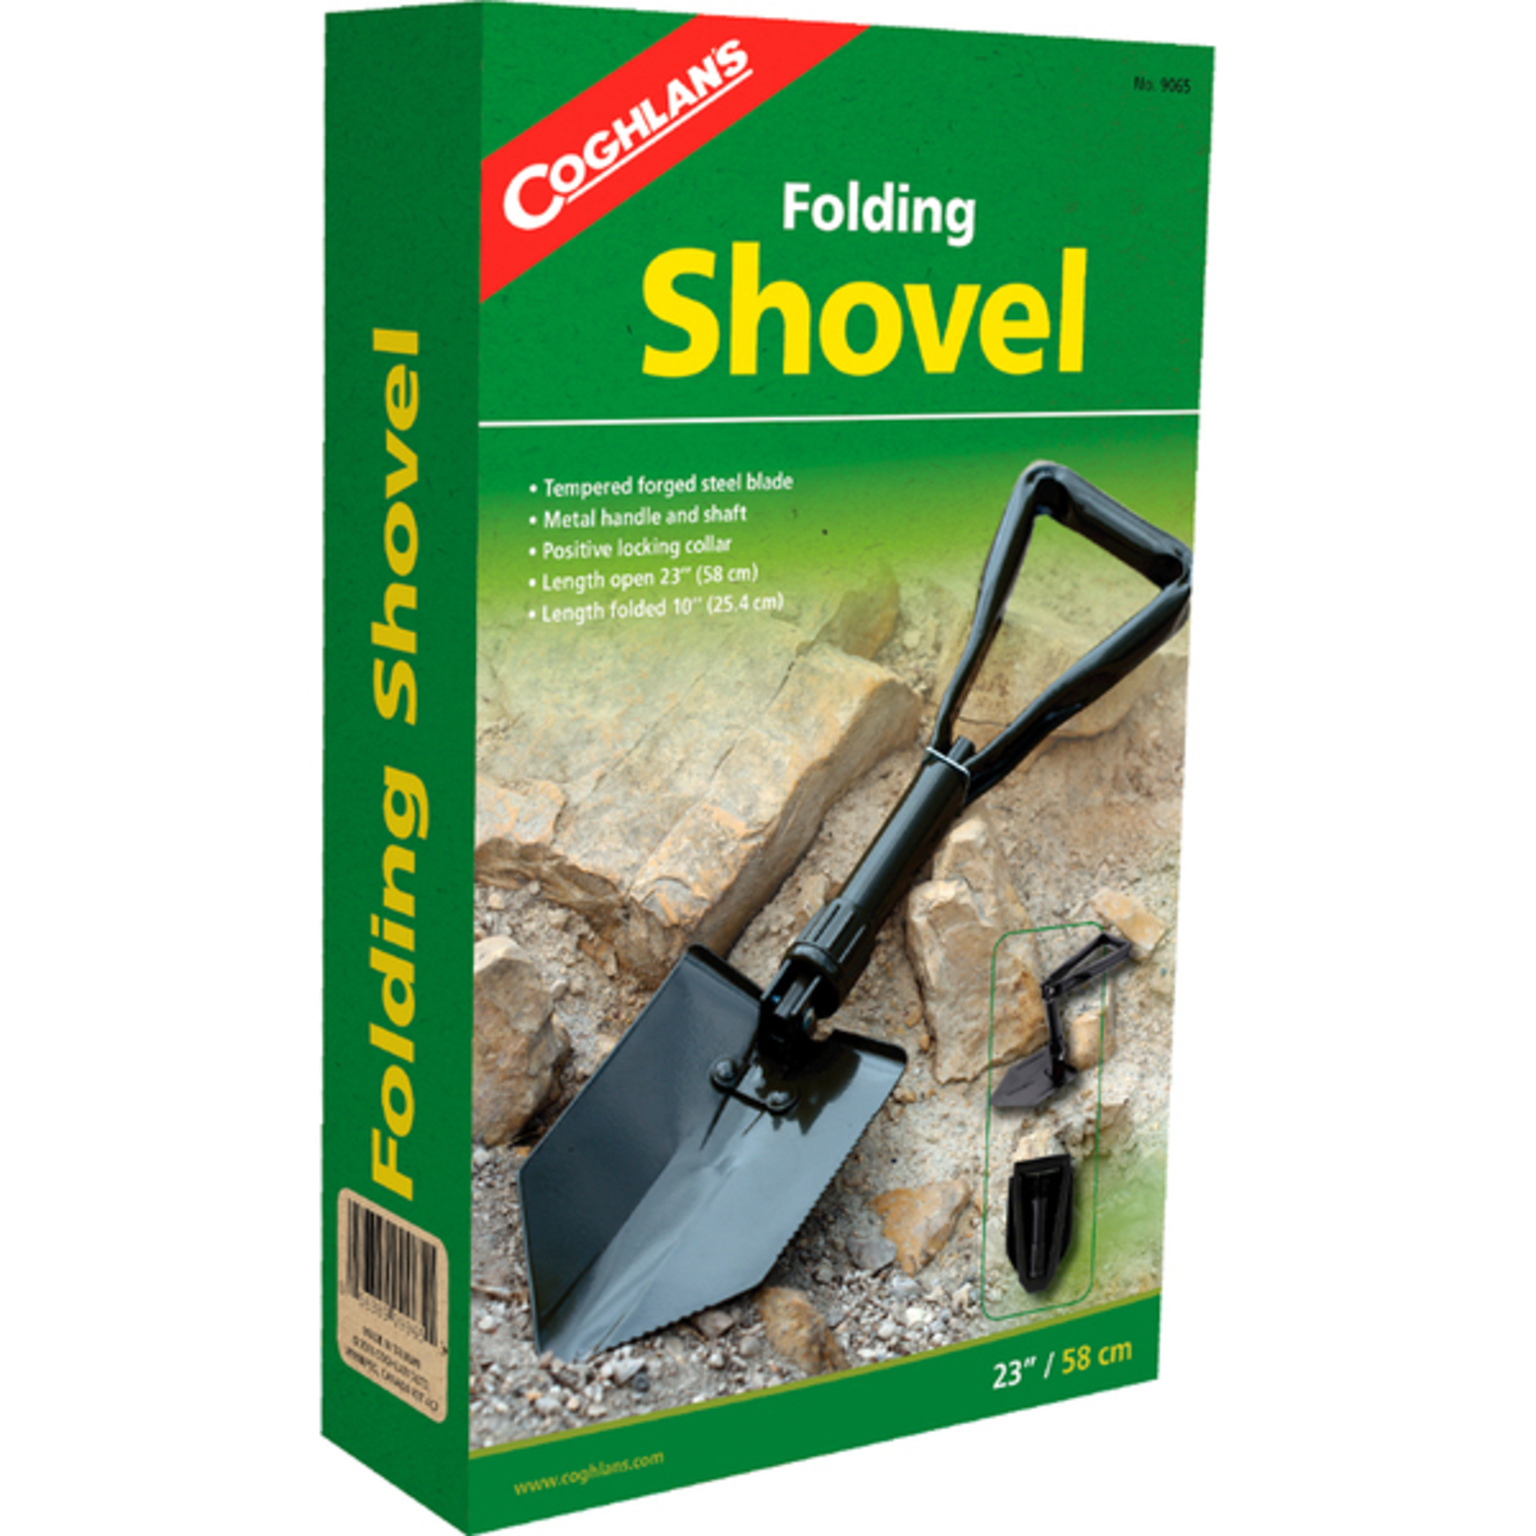 CoghlanÂ´s Folding Shovel